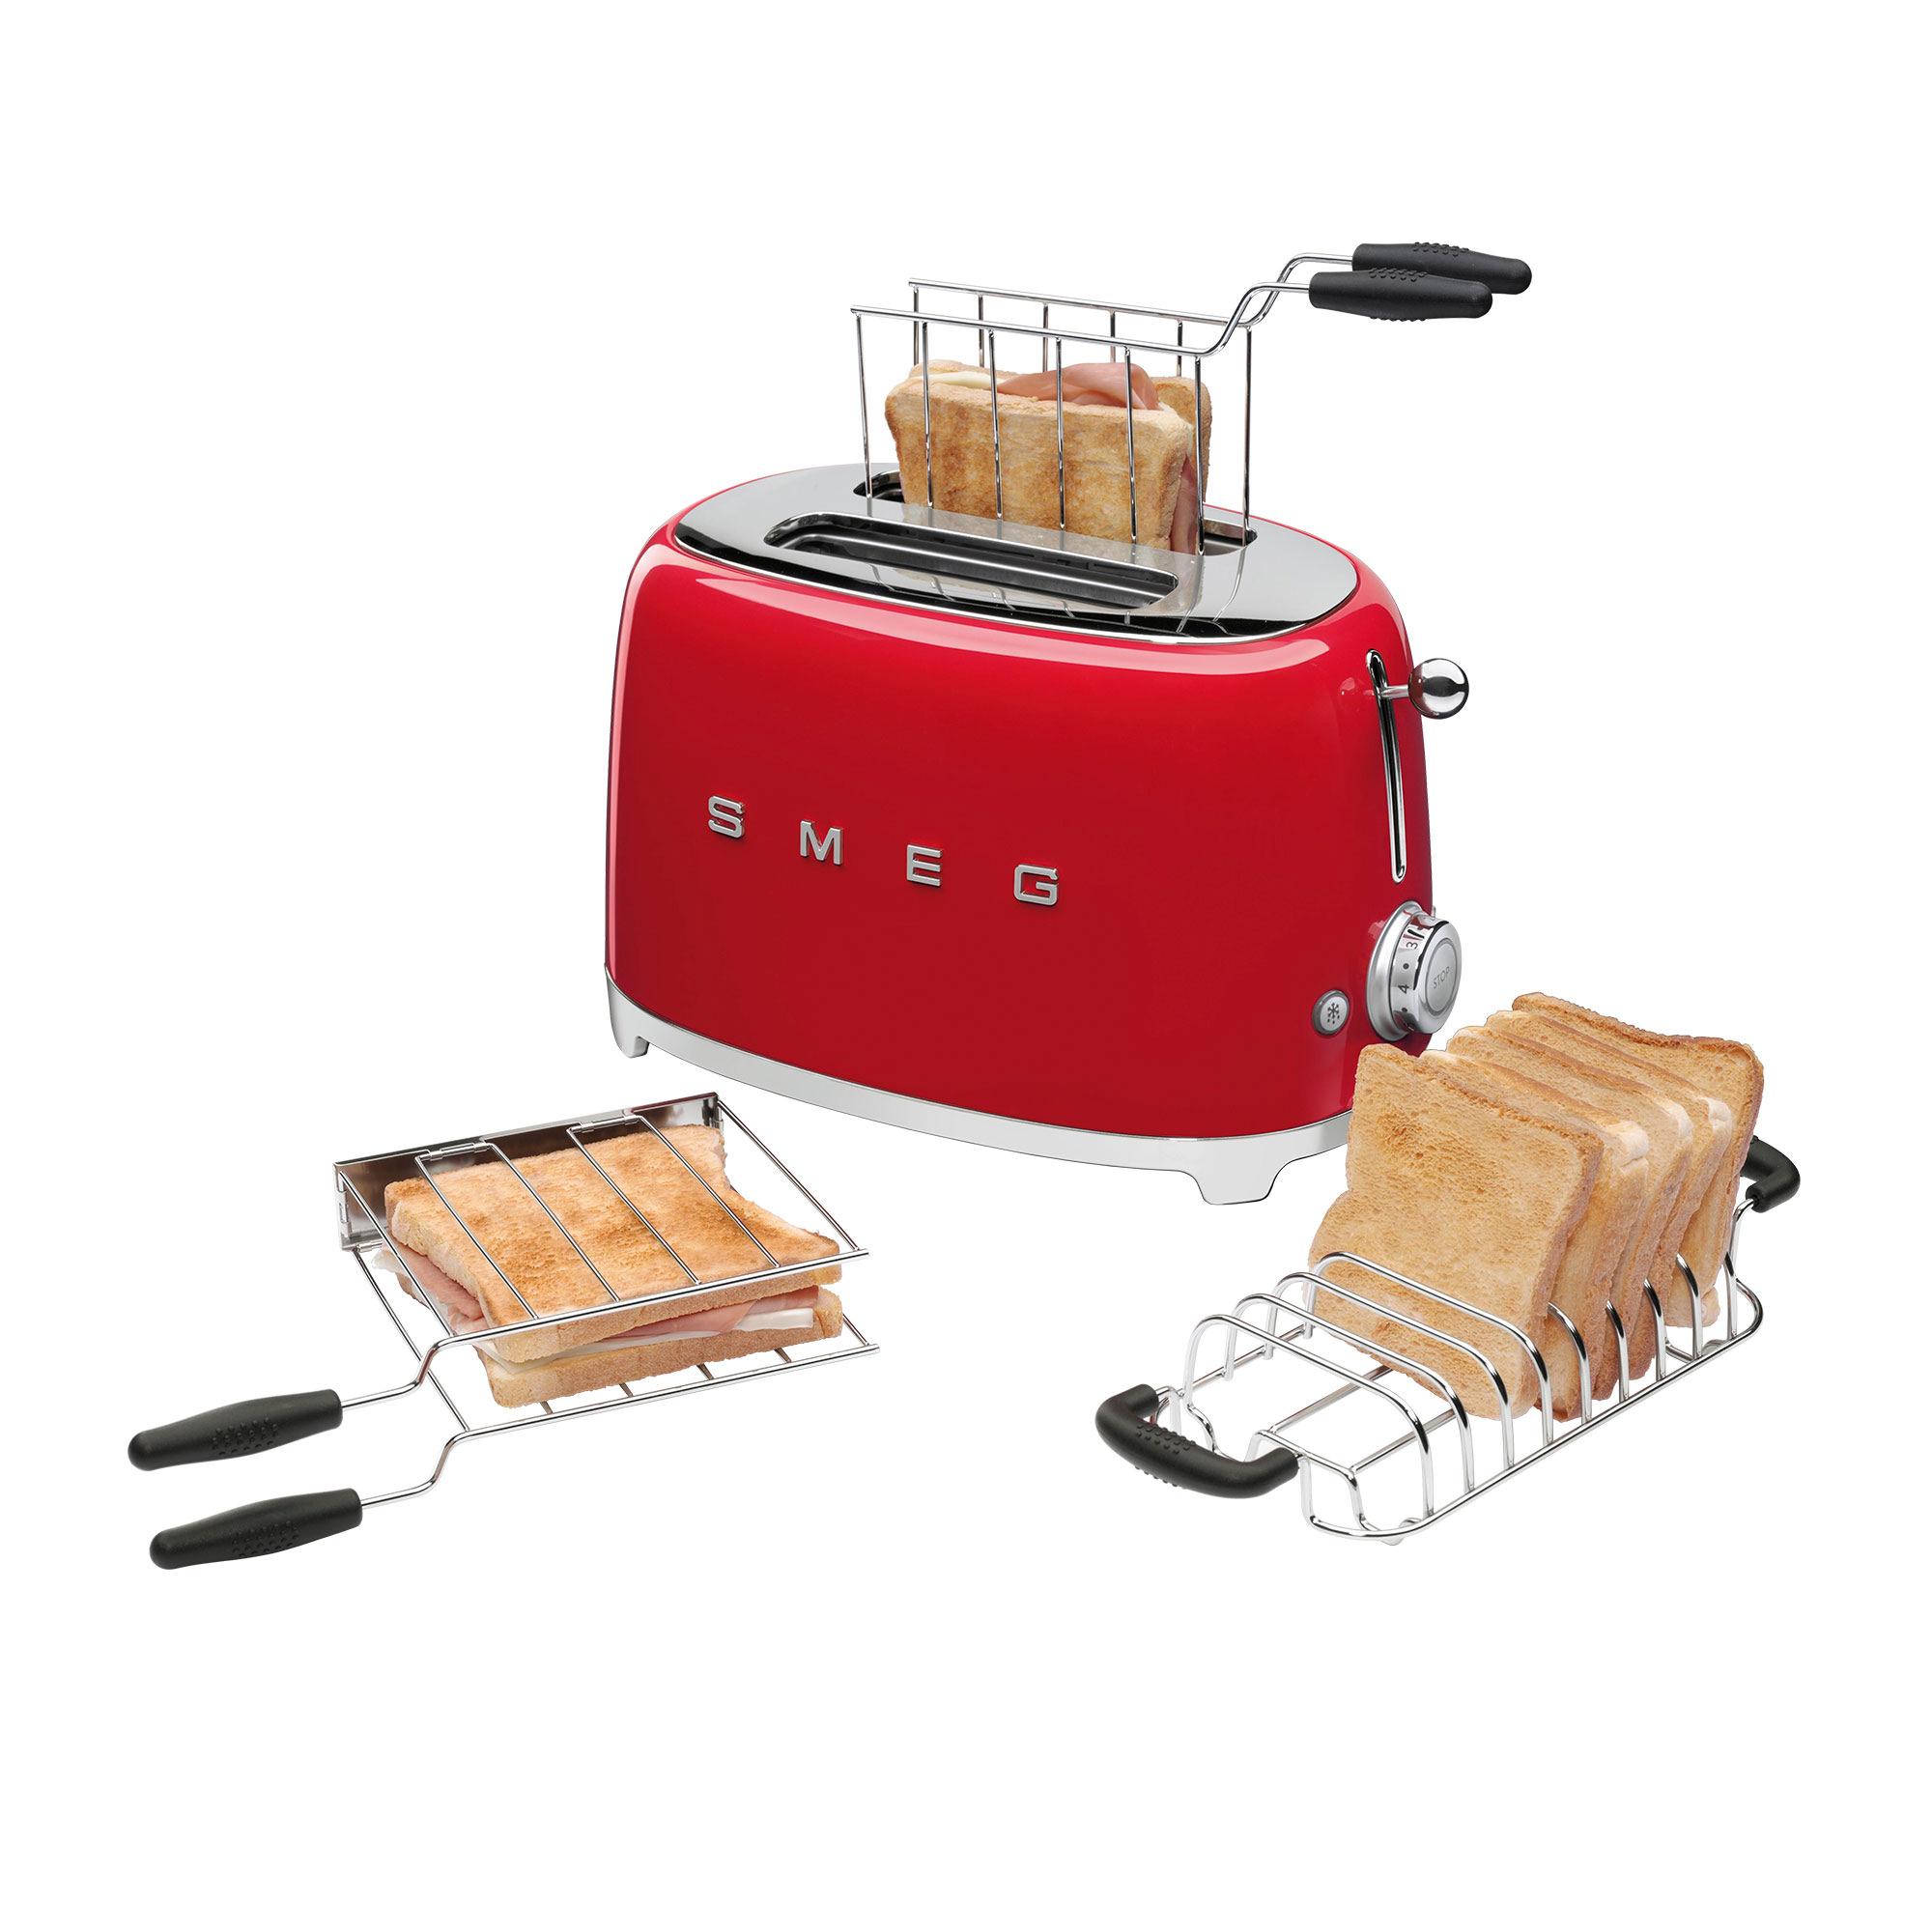 Smeg 50's Retro Style 2 Slice Toaster Red Image 2